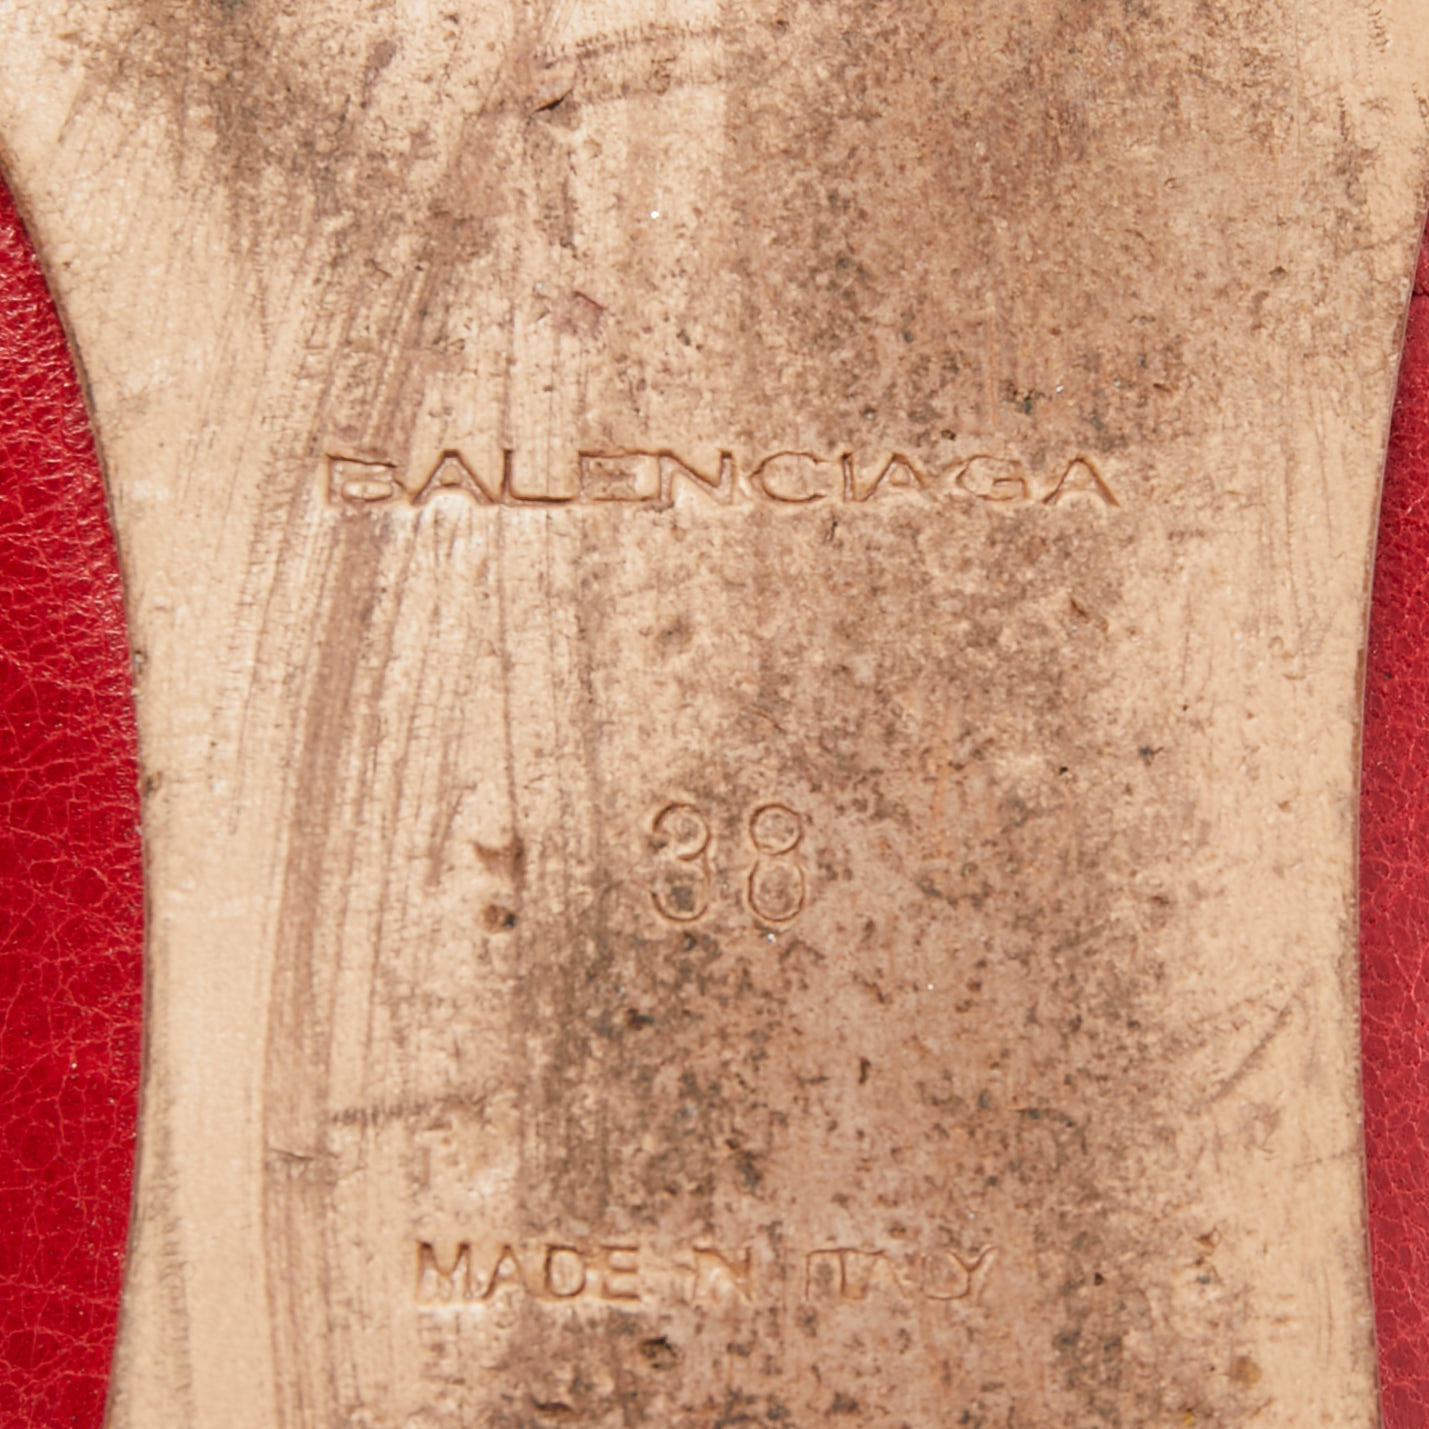 Balenciaga Red Leather Arena Ballet Flats Size 38